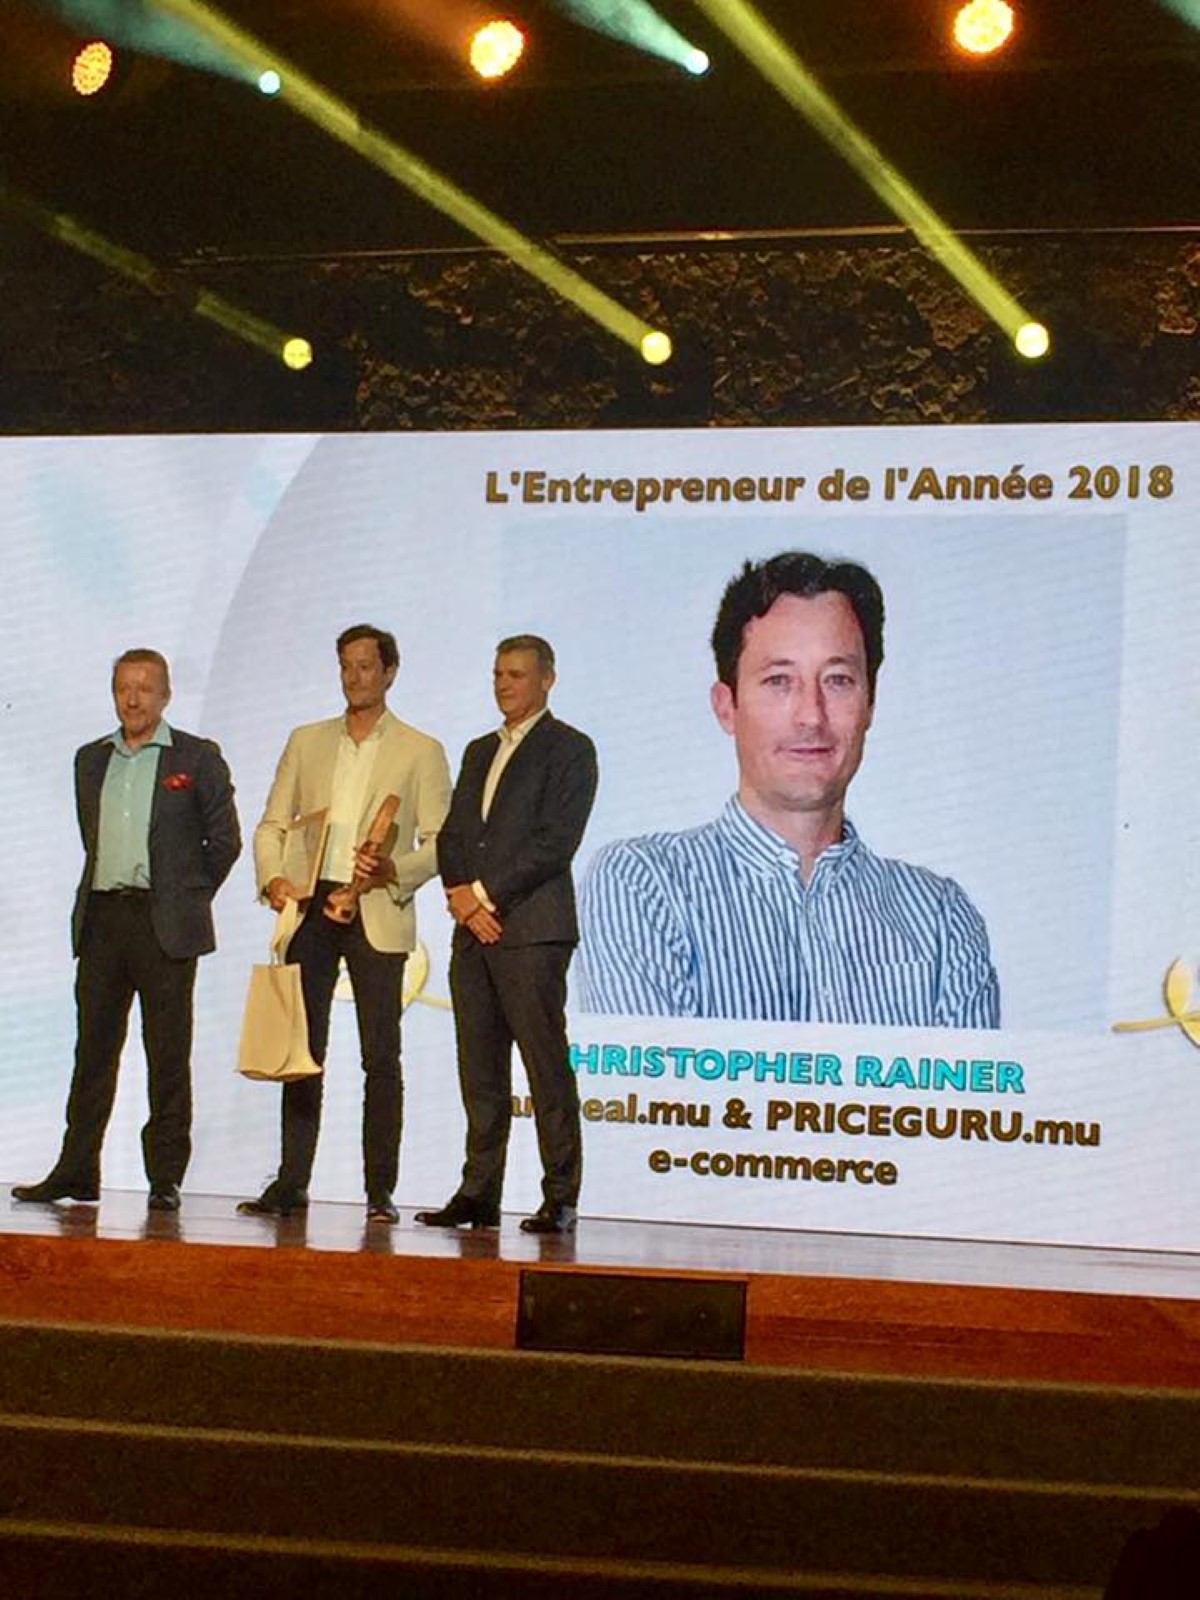 L’Entrepreneur de l’année 2018 – Tecoma Award : Christopher Rainer de MariDeal.mu & PriceGuru.mu